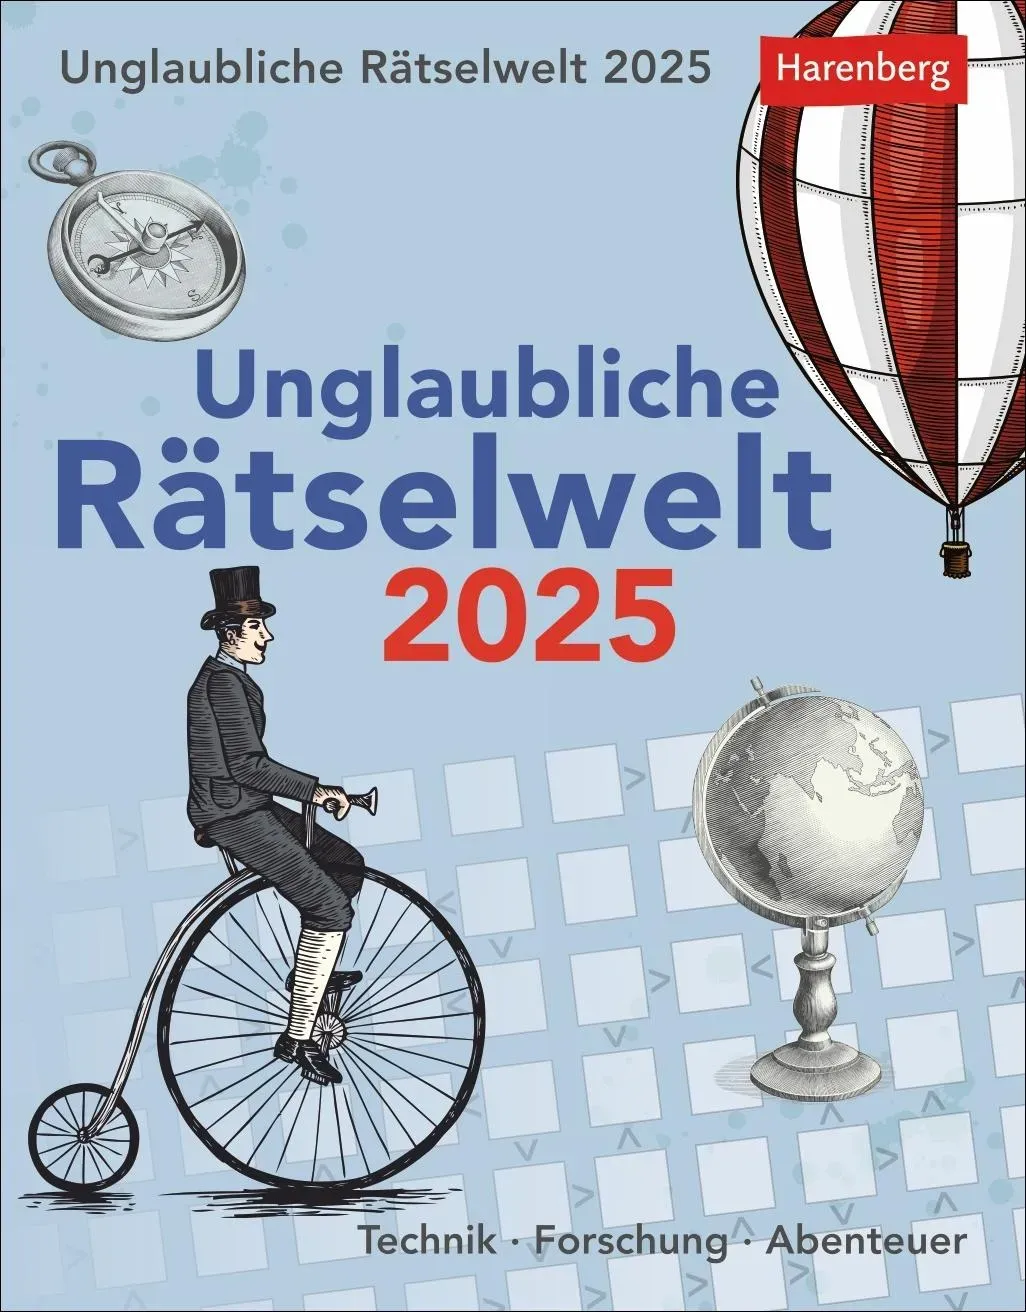 Harenberg, Kalender, Unglaubliche Rätselwelt Tagesabreißkalender 2025 - Technik, Forschung, Abenteuer (Deutsch)